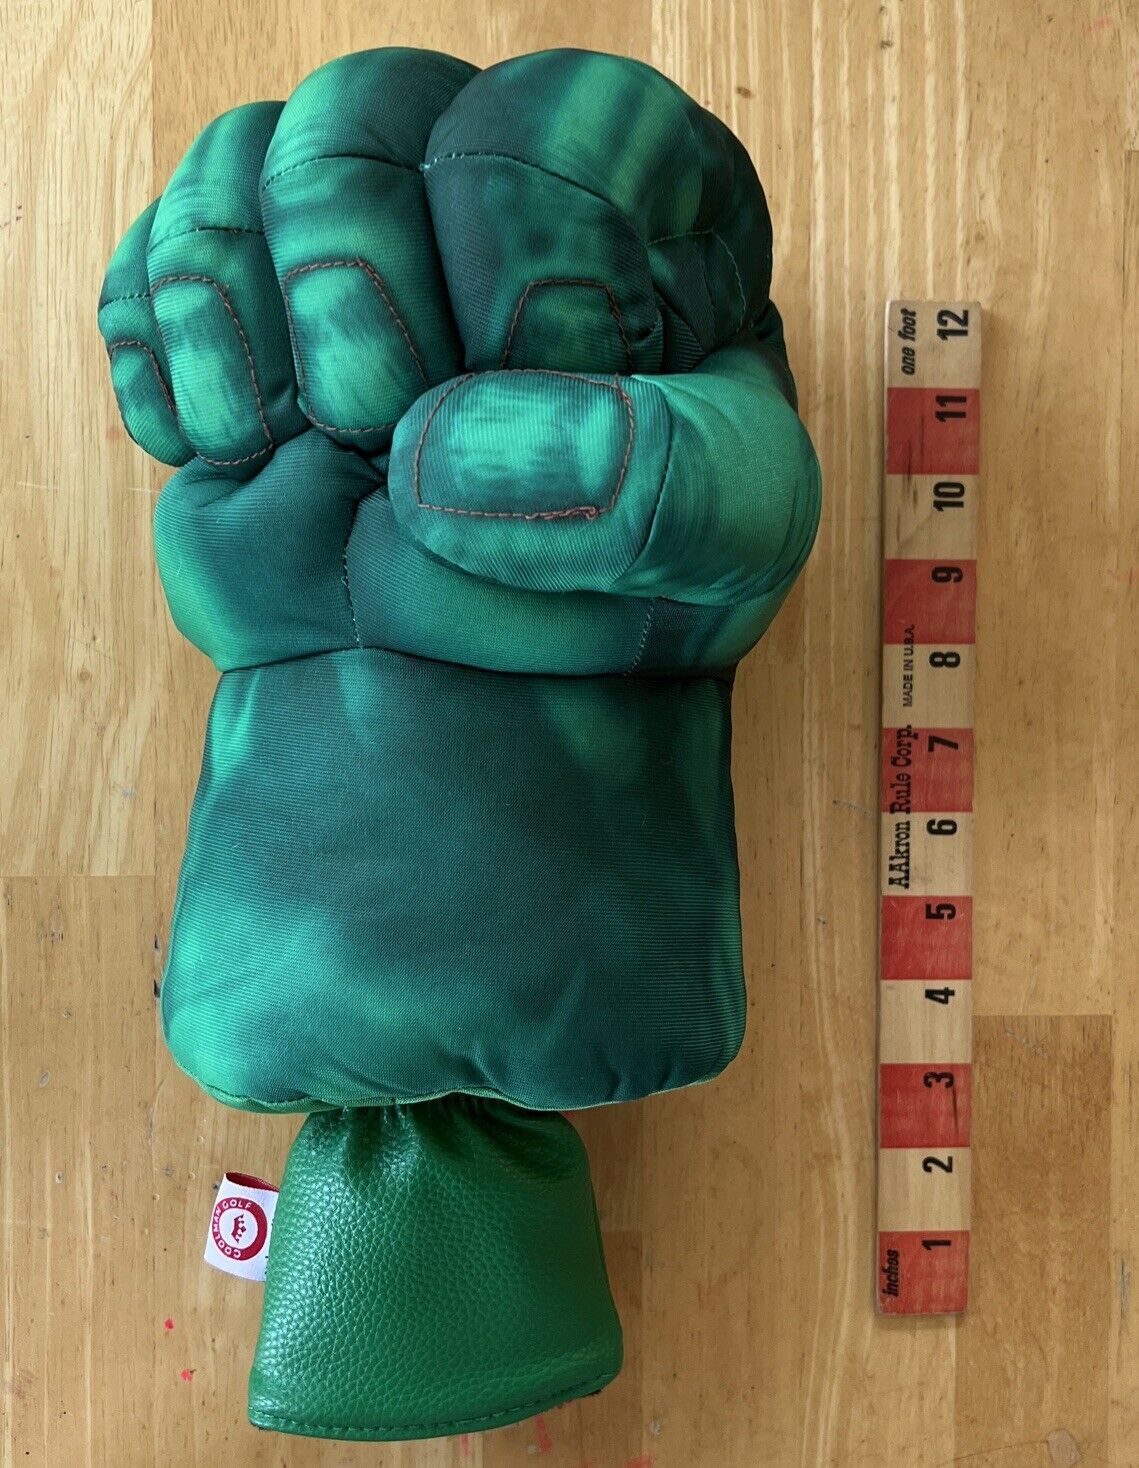 Hulk Fist Hand Golf  Driver Head Cover Fairway NEW Superhero Boxing Glove